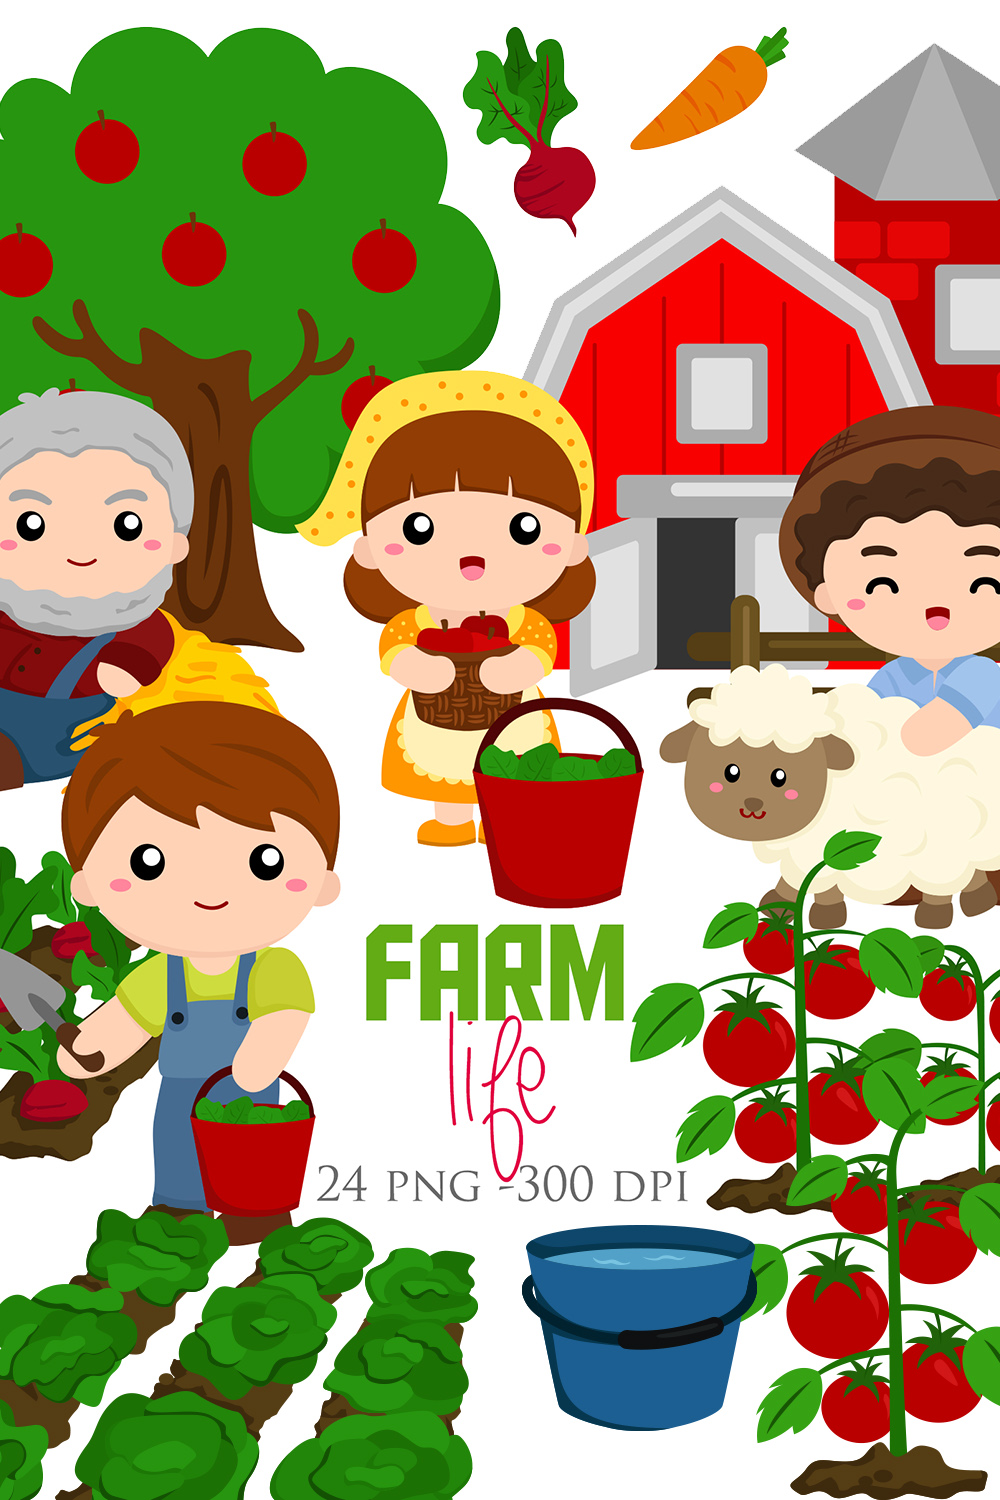 Kids and Farmer Family Farm Life Illustration Vector Clipart Cartoon pinterest preview image.